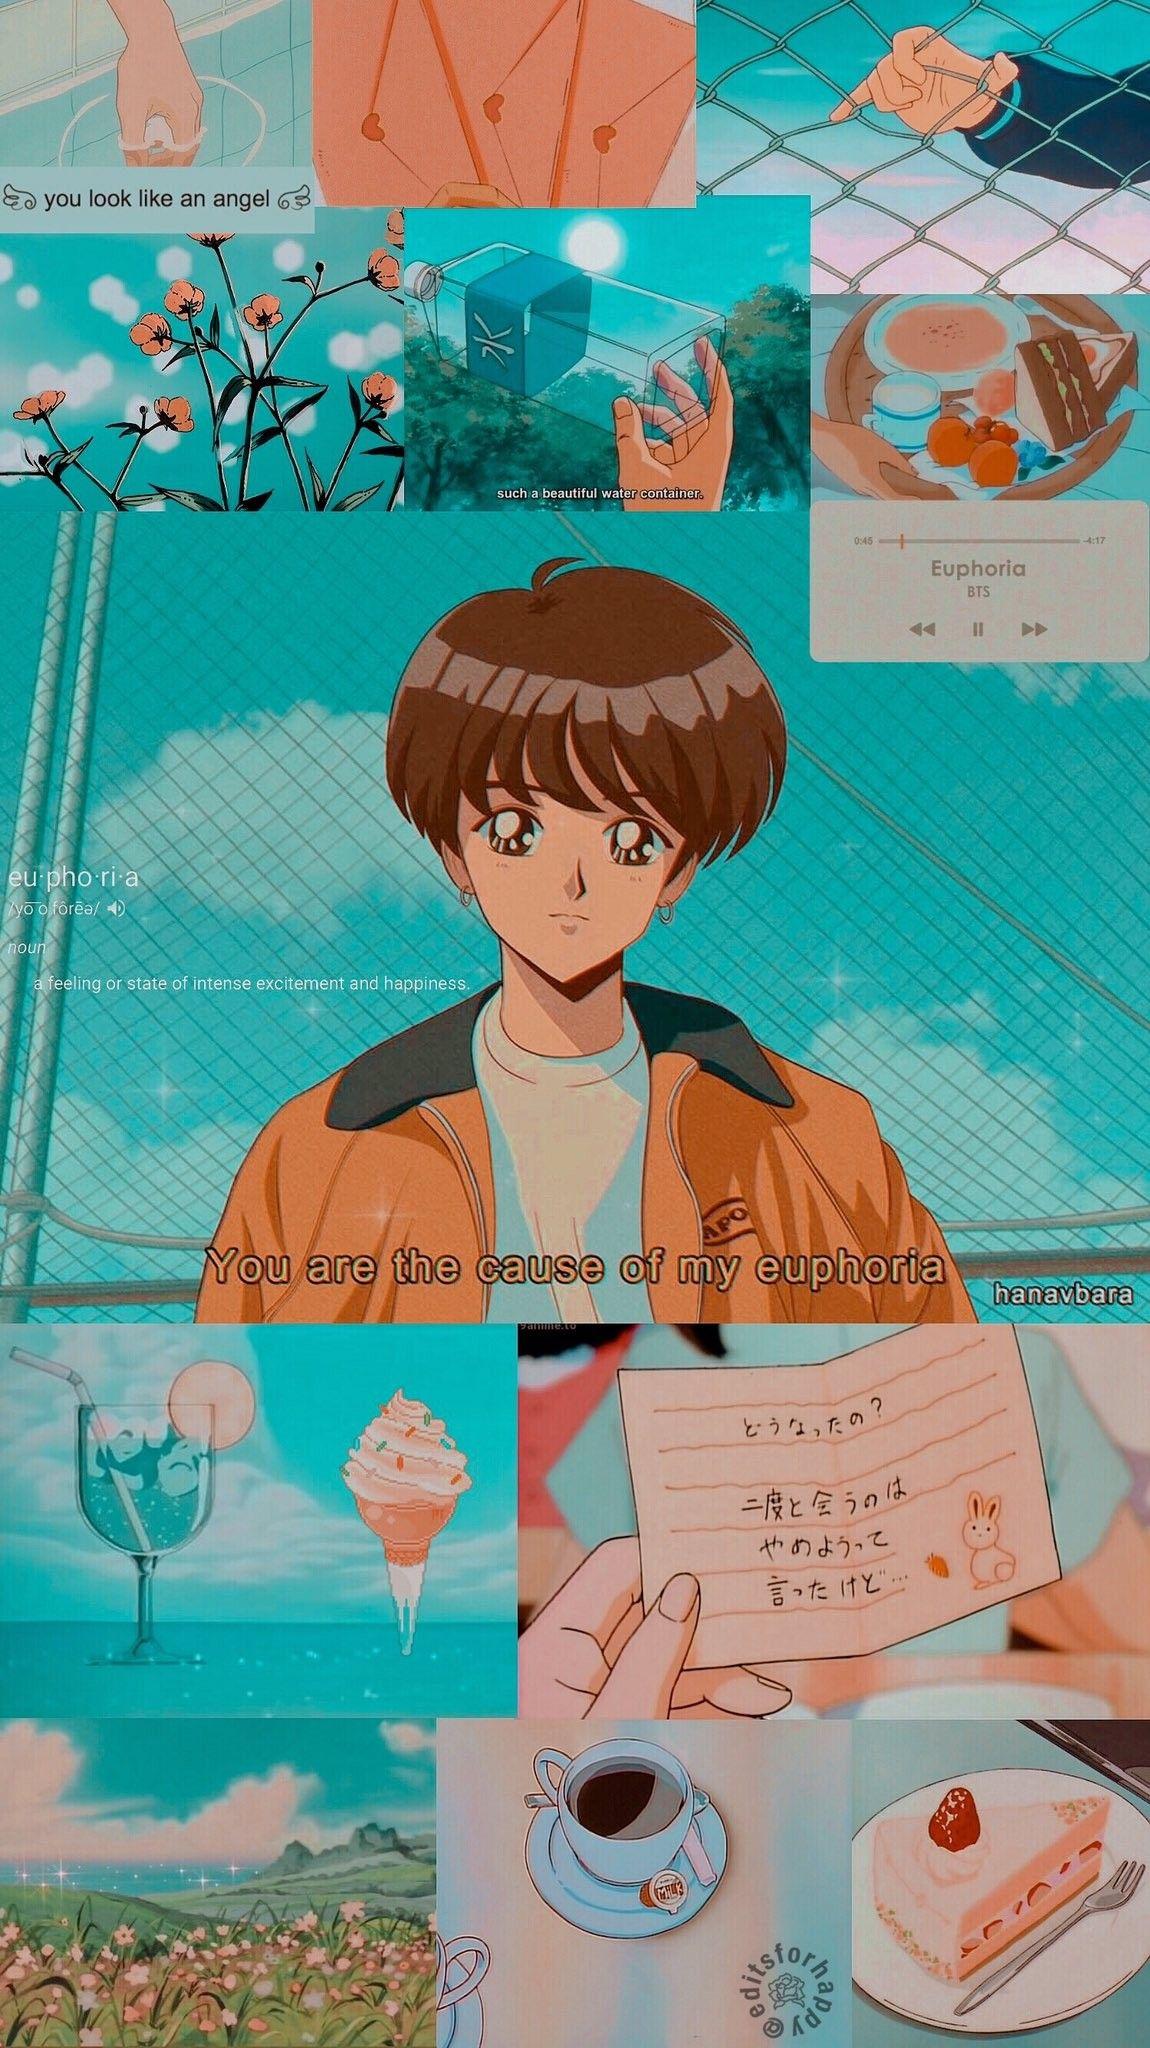 Bts 90S Anime Wallpaper : Bts 90s Anime Wallpaper - Bts anime fanart ...